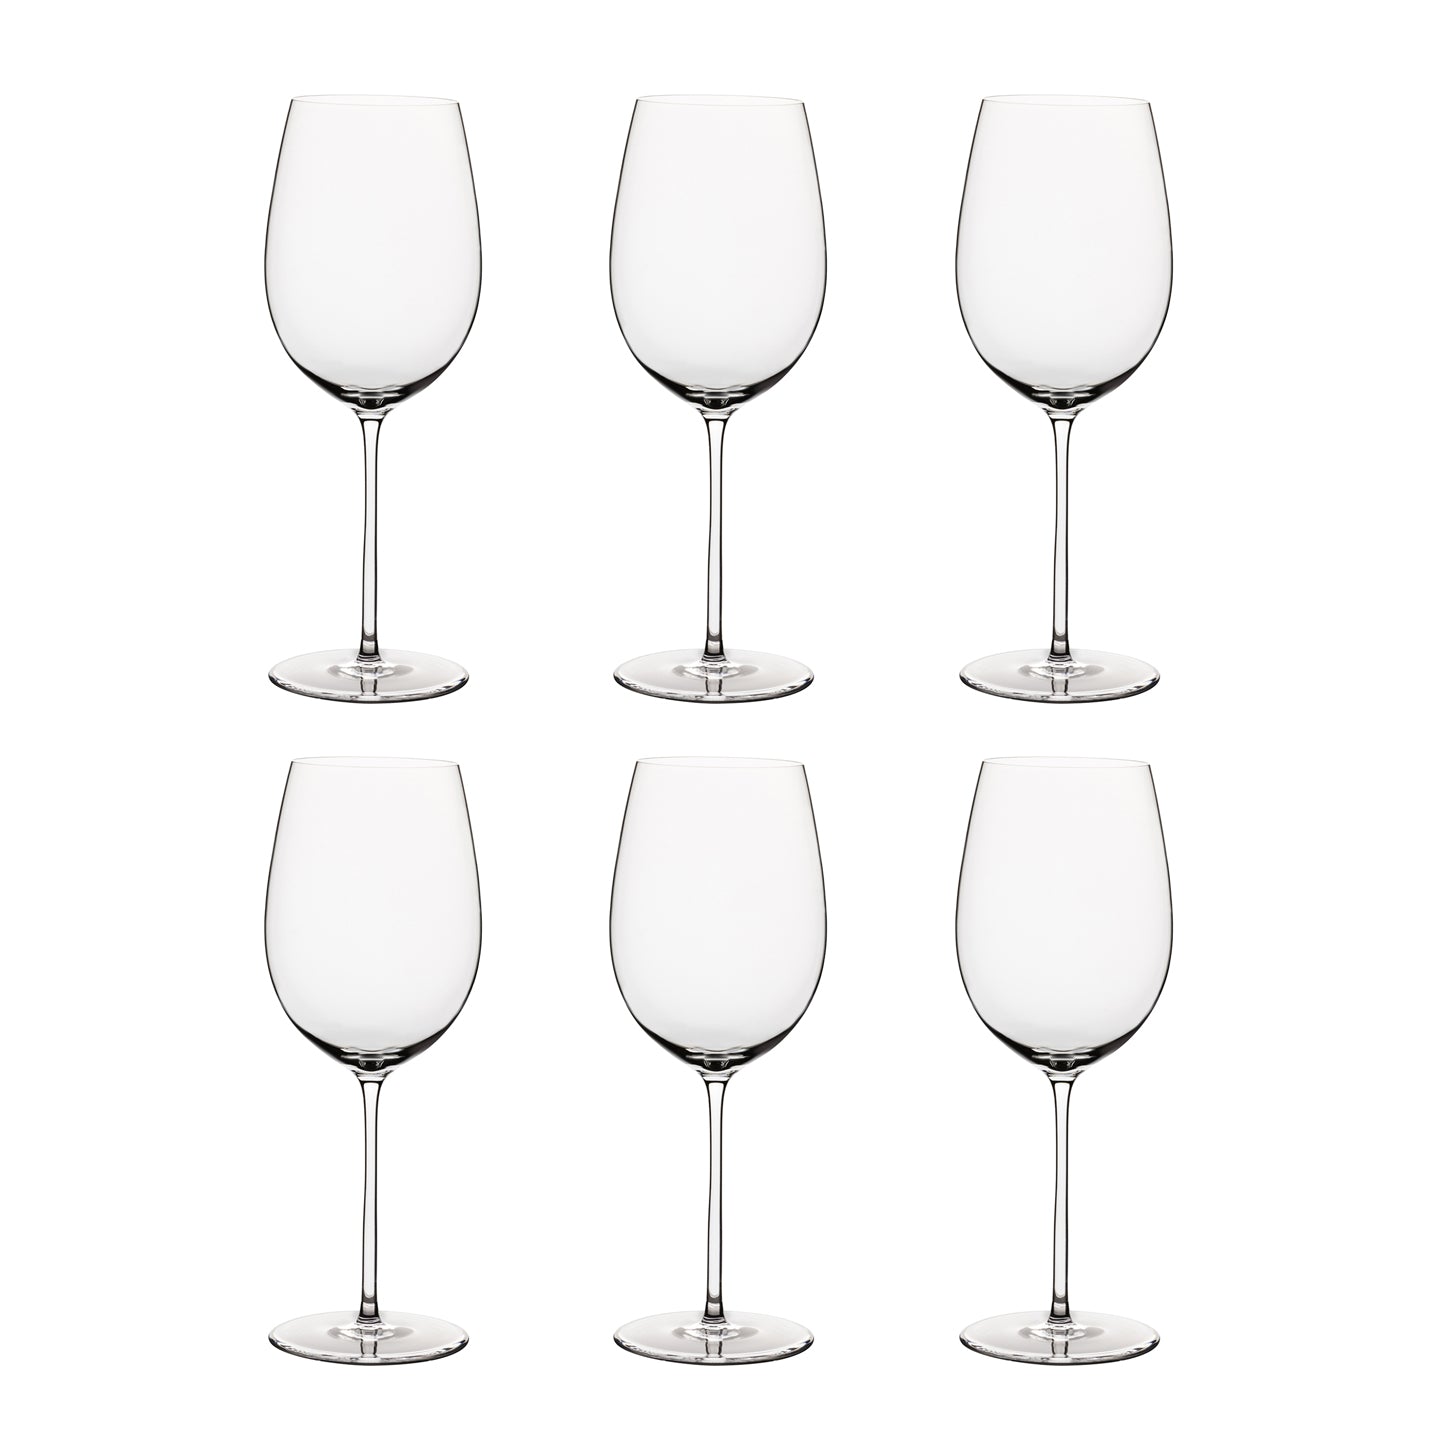 Leila White Wine Glass / Set of 6